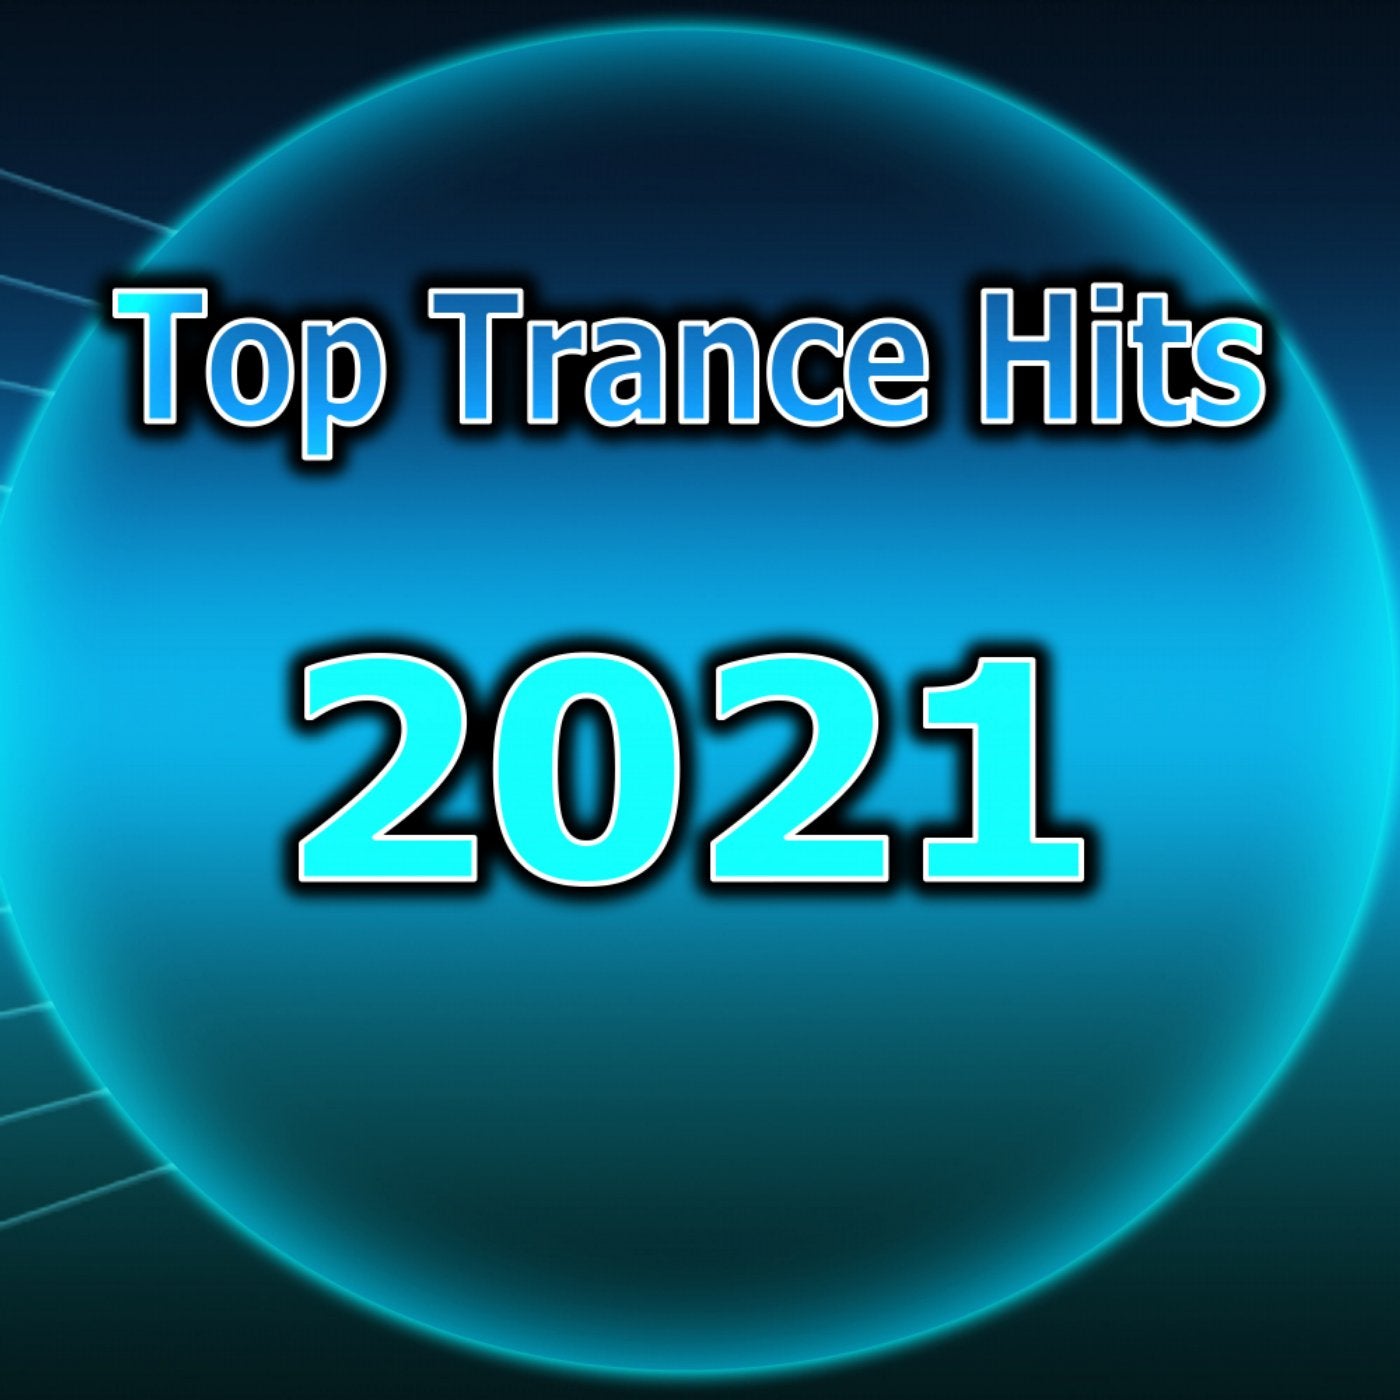 Top Trance Hits 2021